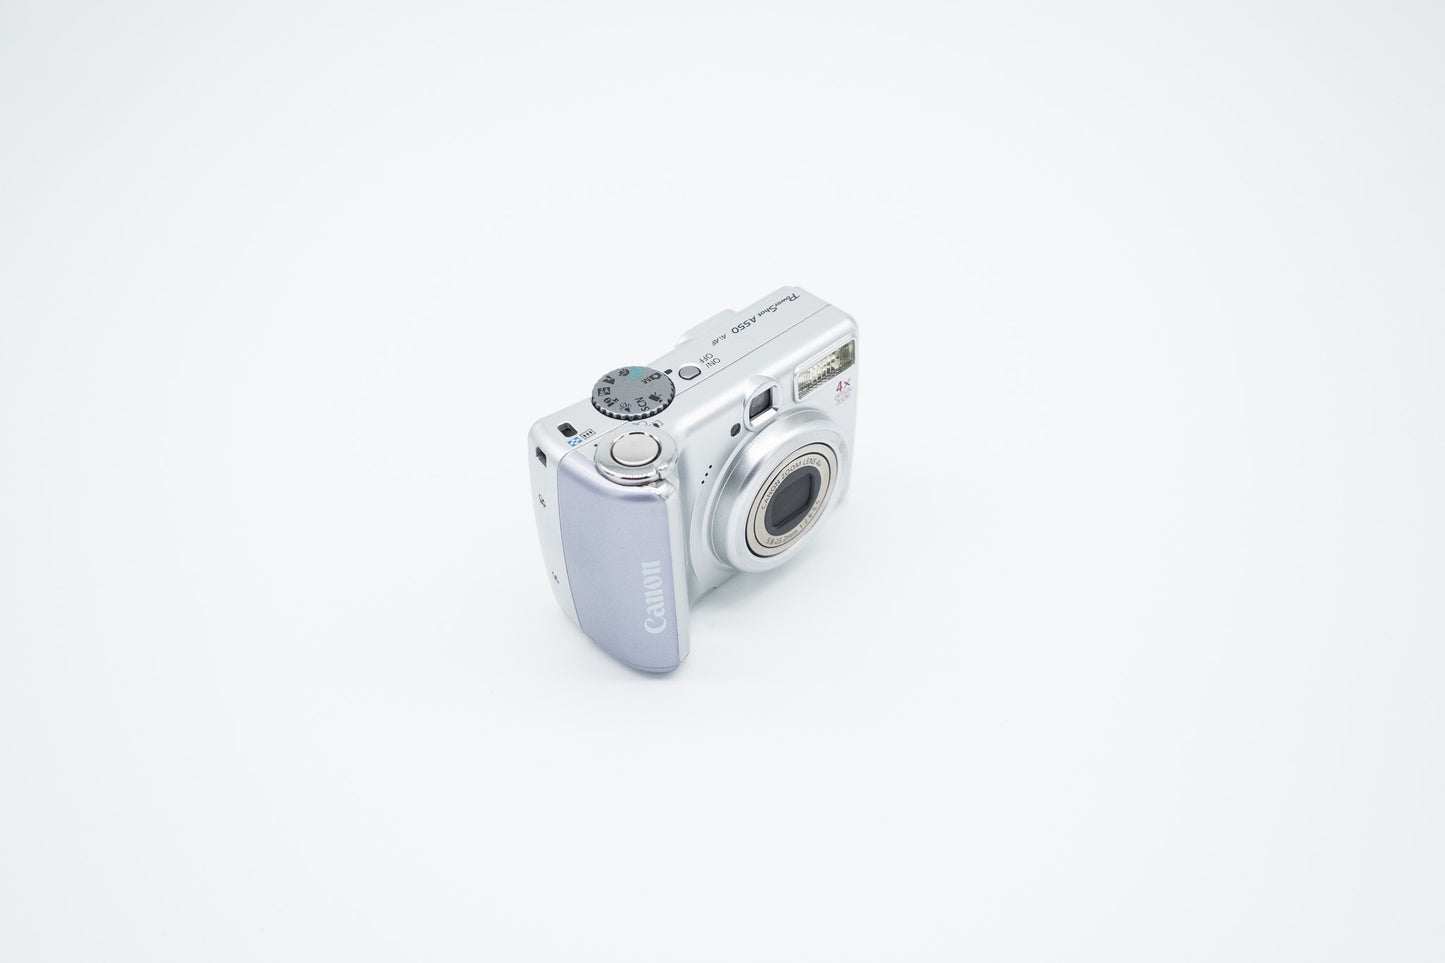 Canon A550 - Digicam